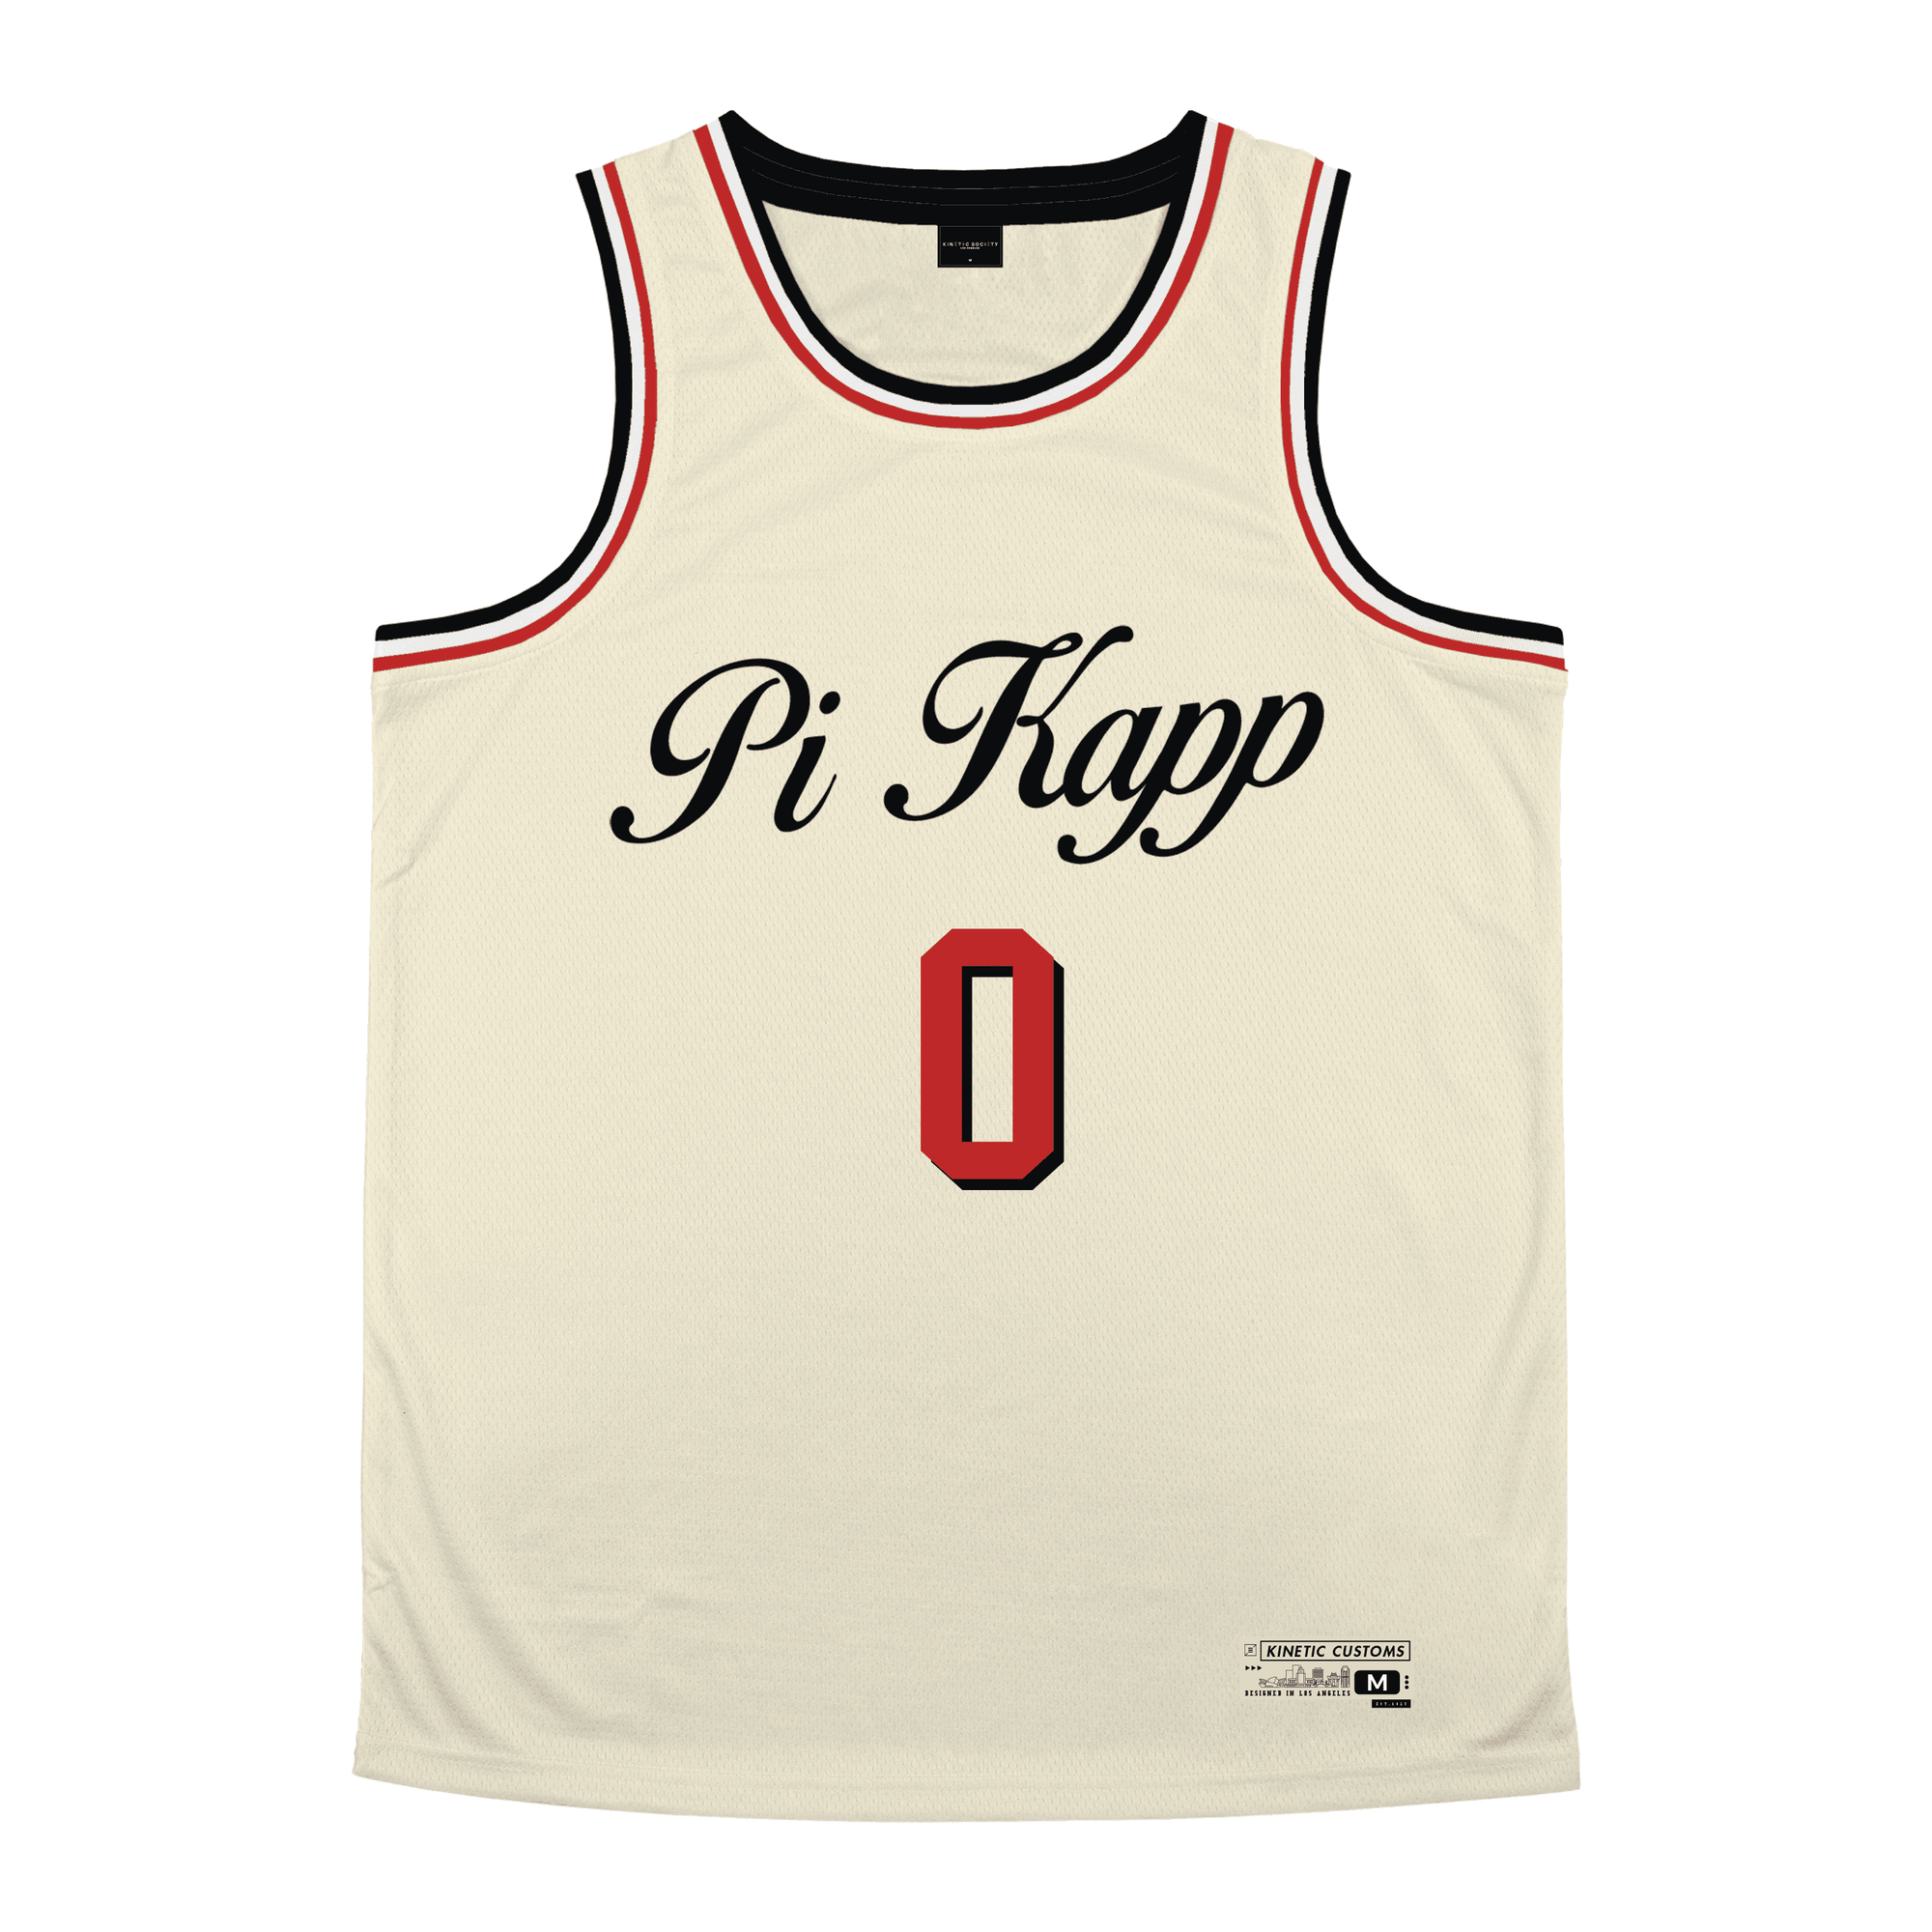 Pi Kappa Phi - VIntage Cream Basketball Jersey